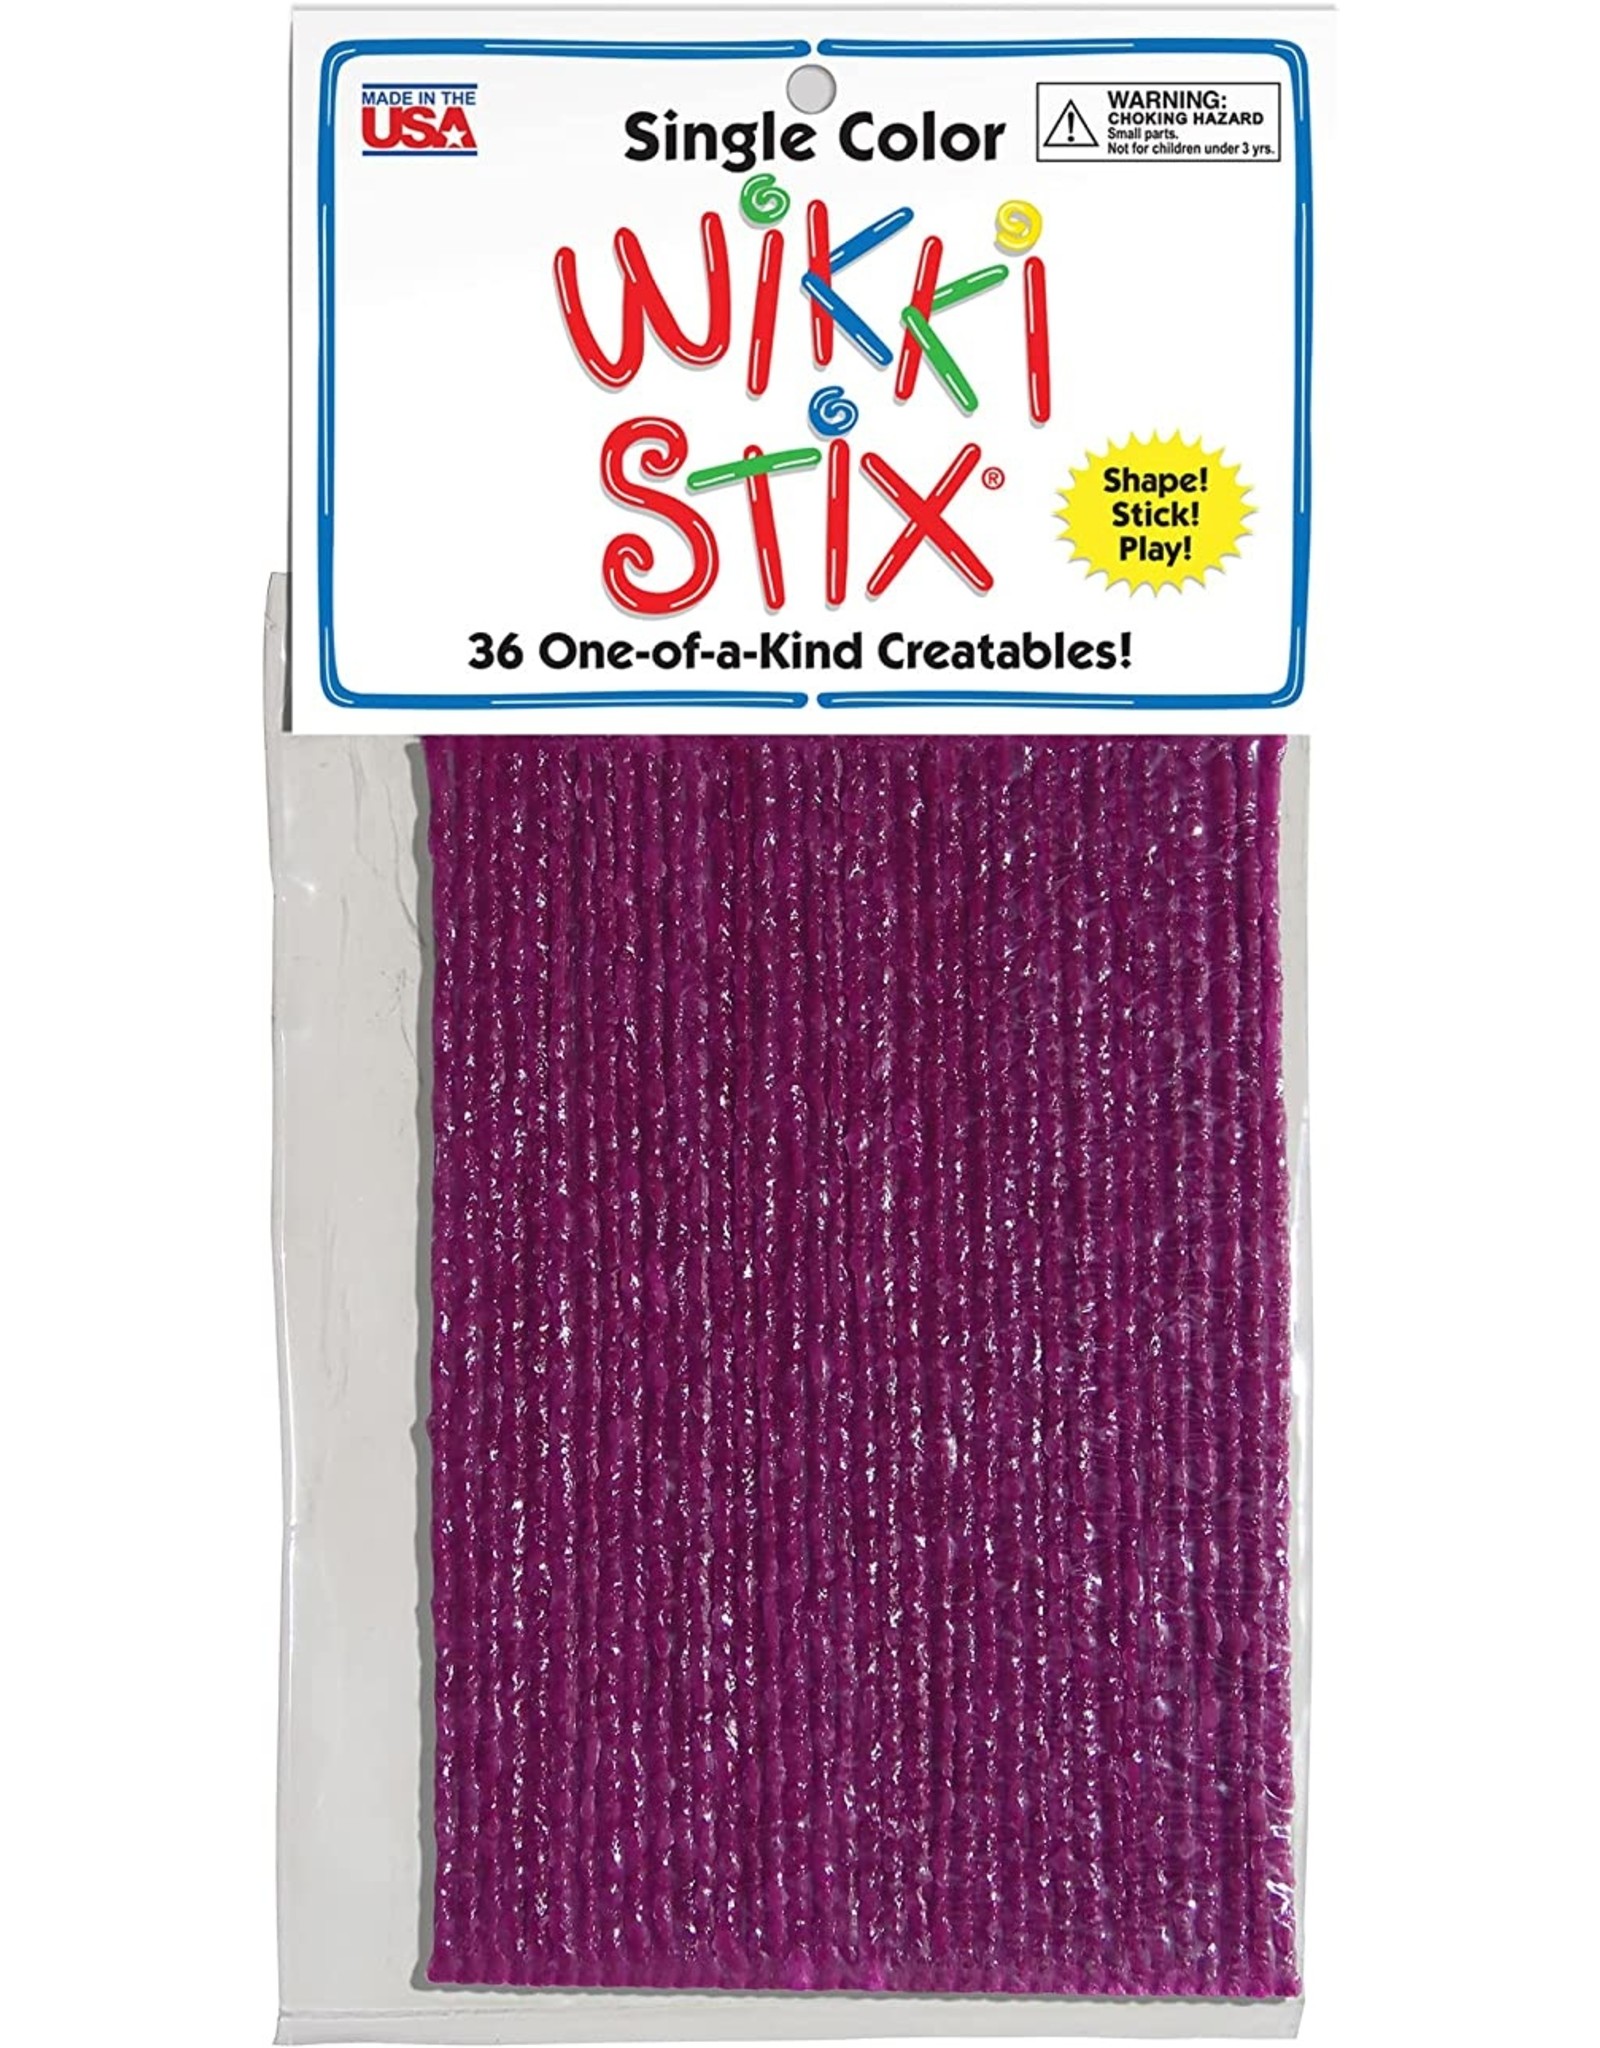 Wikki Stix Purple